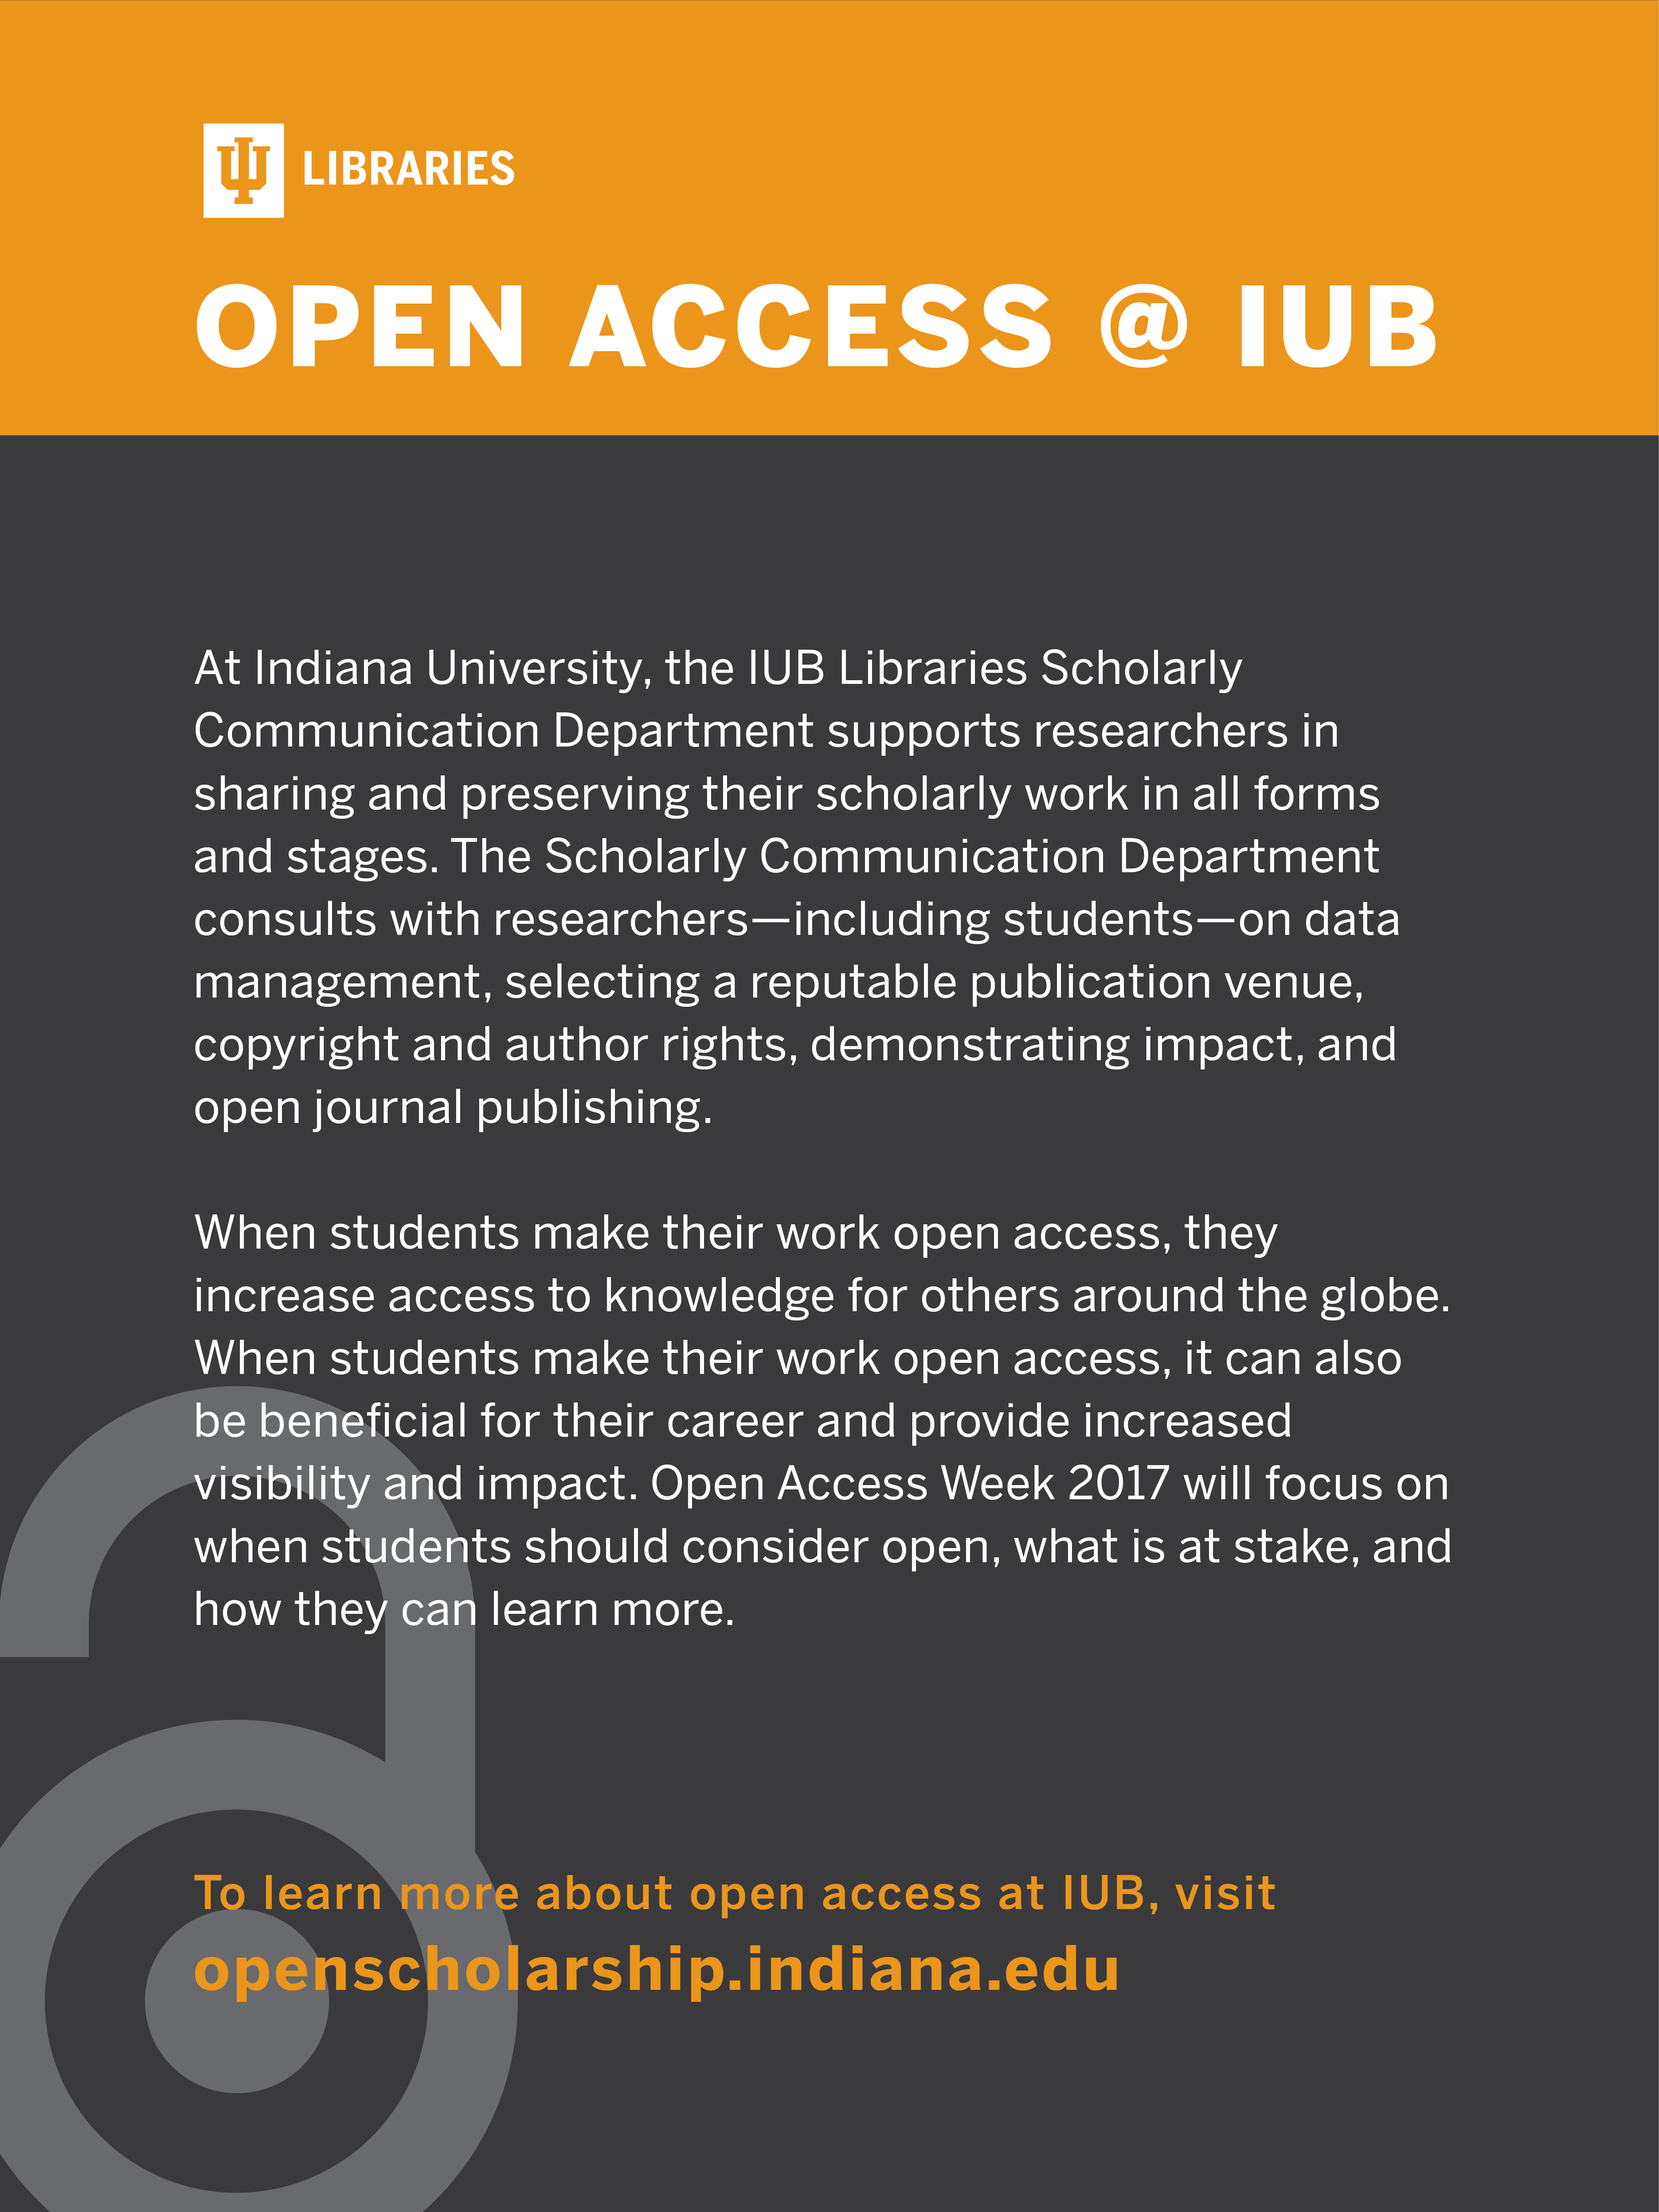 Image 4: IUB Open Access Policy